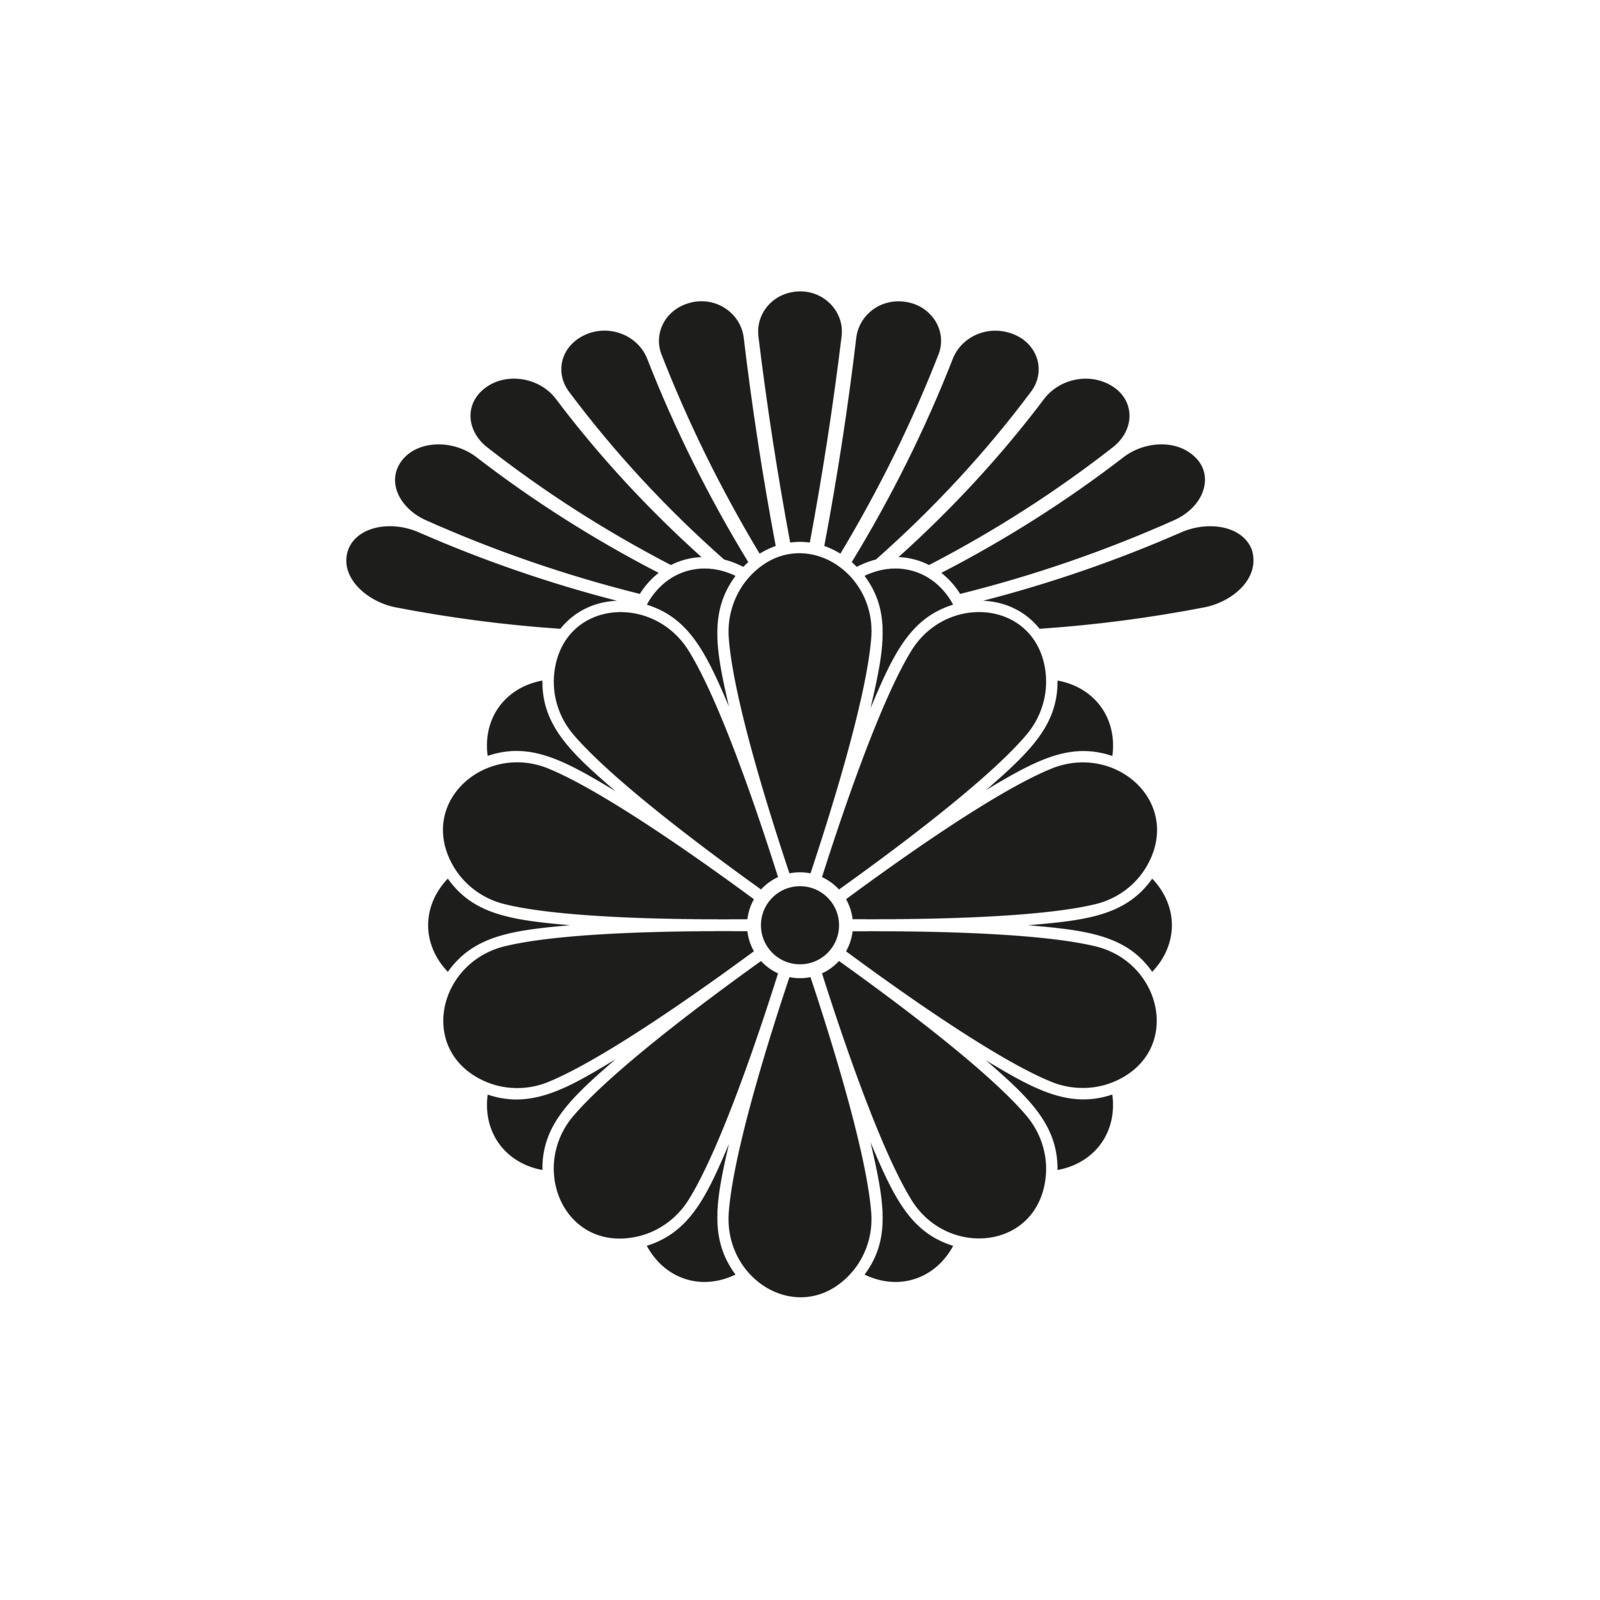 Japanese style design flower Sign or Royal symbol on white background. Vector and illustration